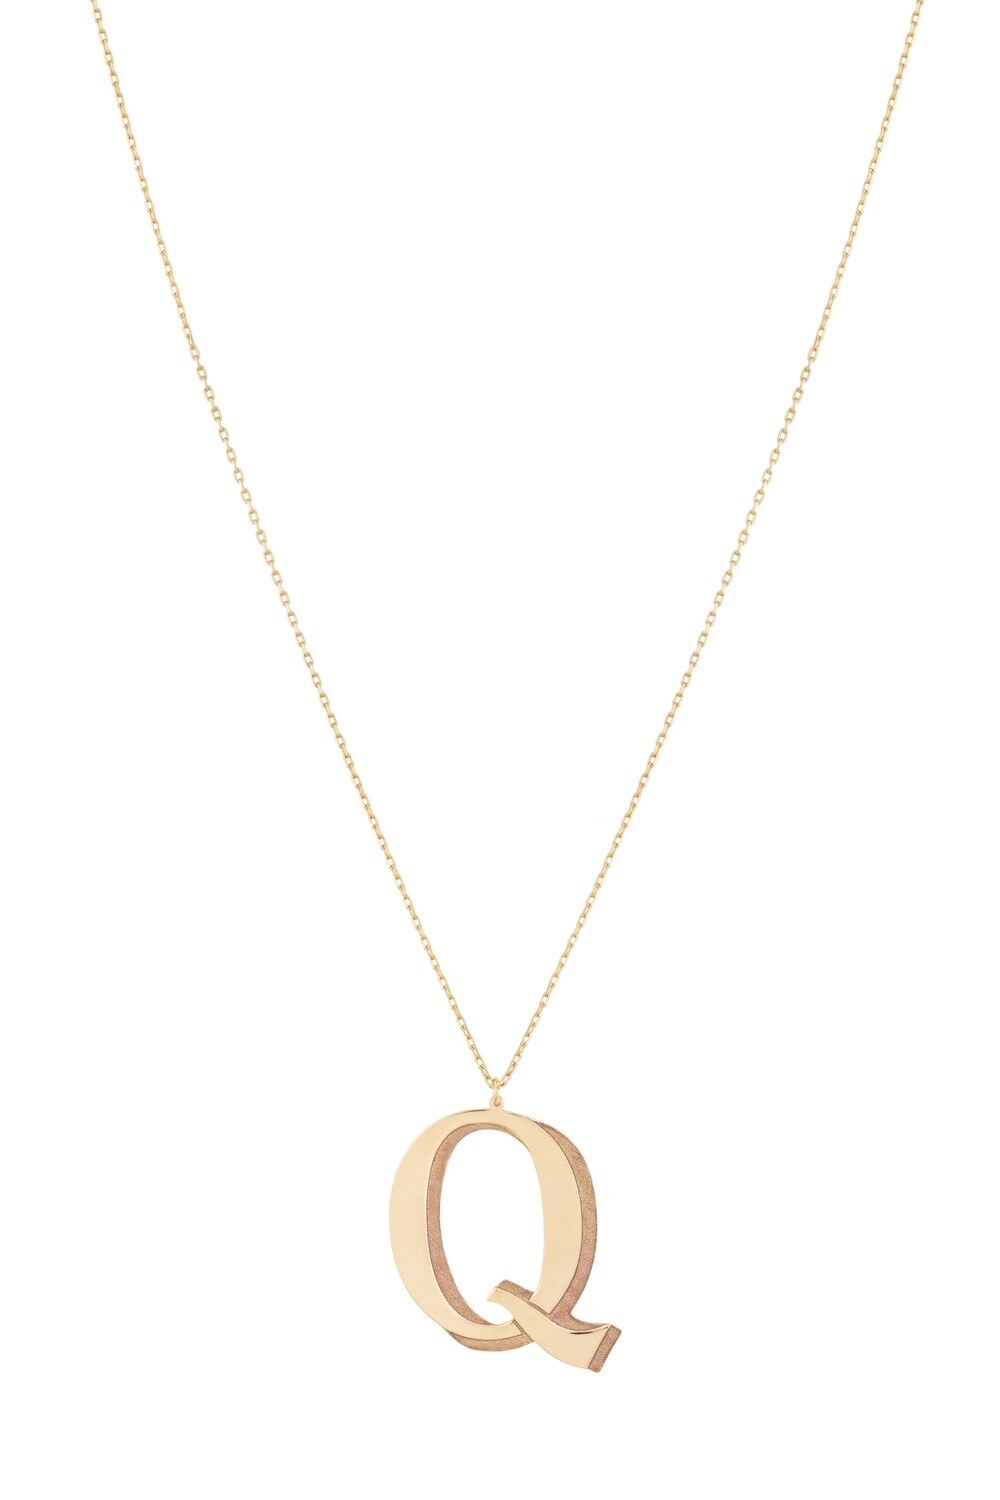 Initials Gold Necklace Letter Q